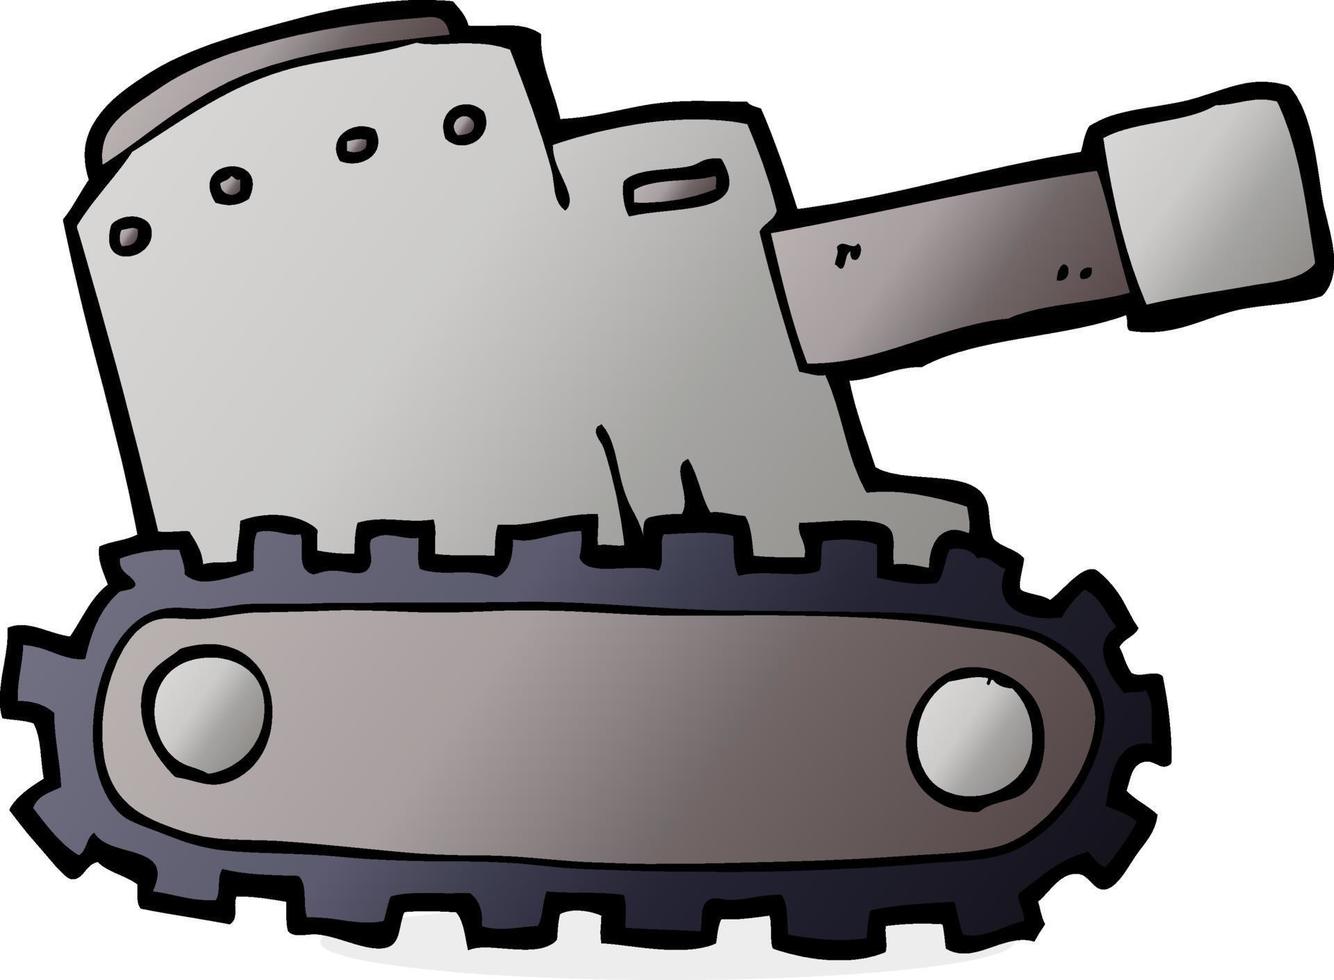 cartooon army tank vector